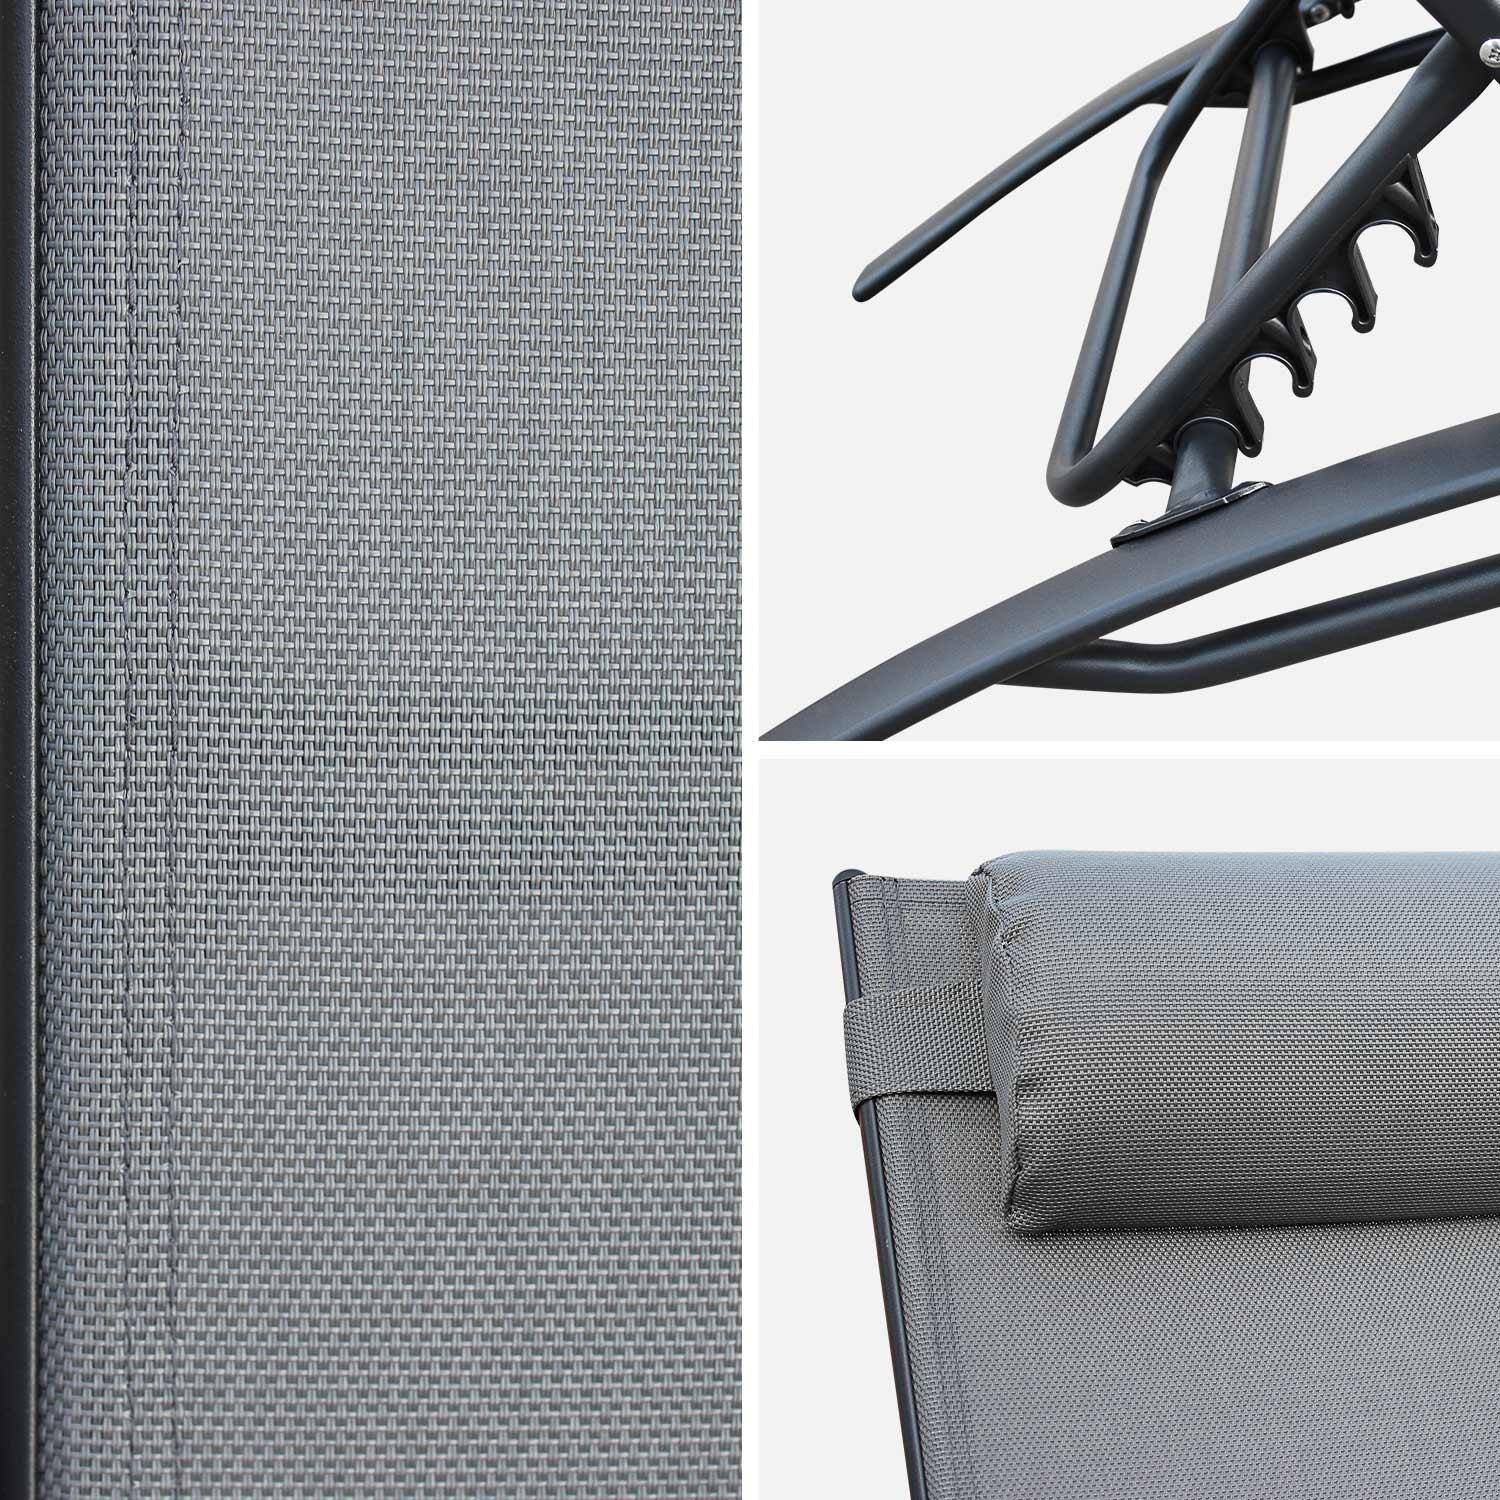 Tumbonas de aluminio antracita y textileno gris| Louisa x2,sweeek,Photo5